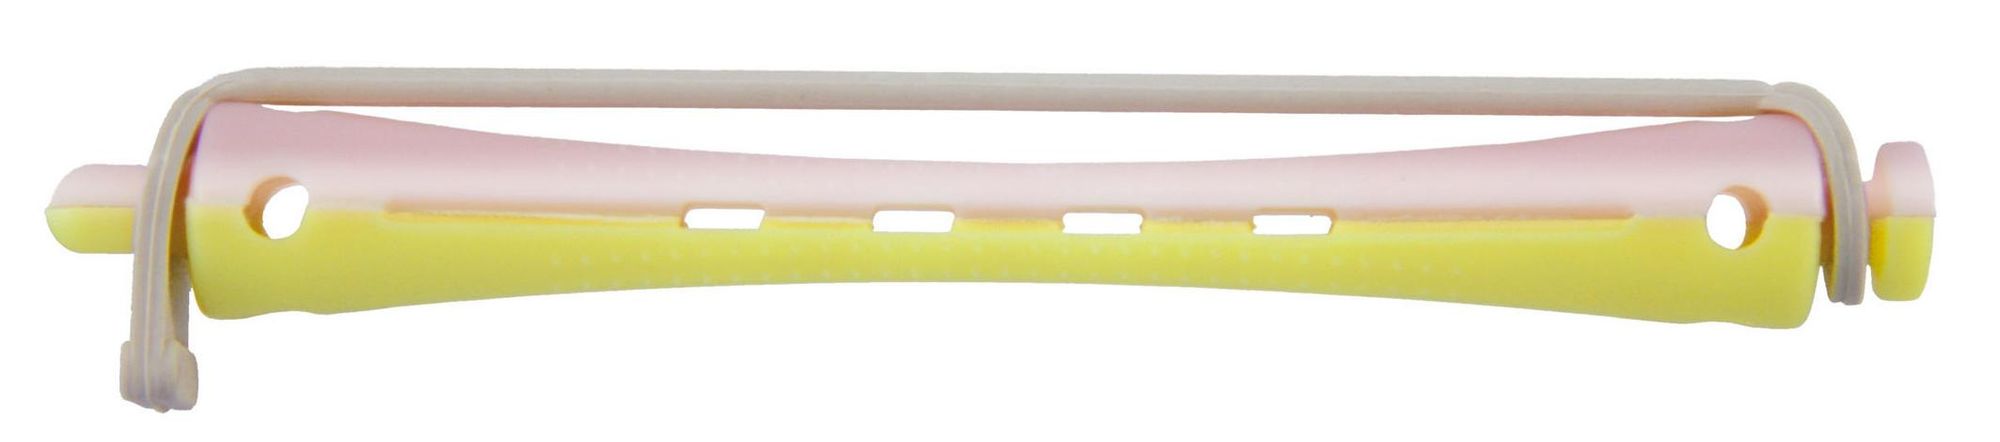 Comair Permanentwikkels lang geel/roze 8mm 12 stuks